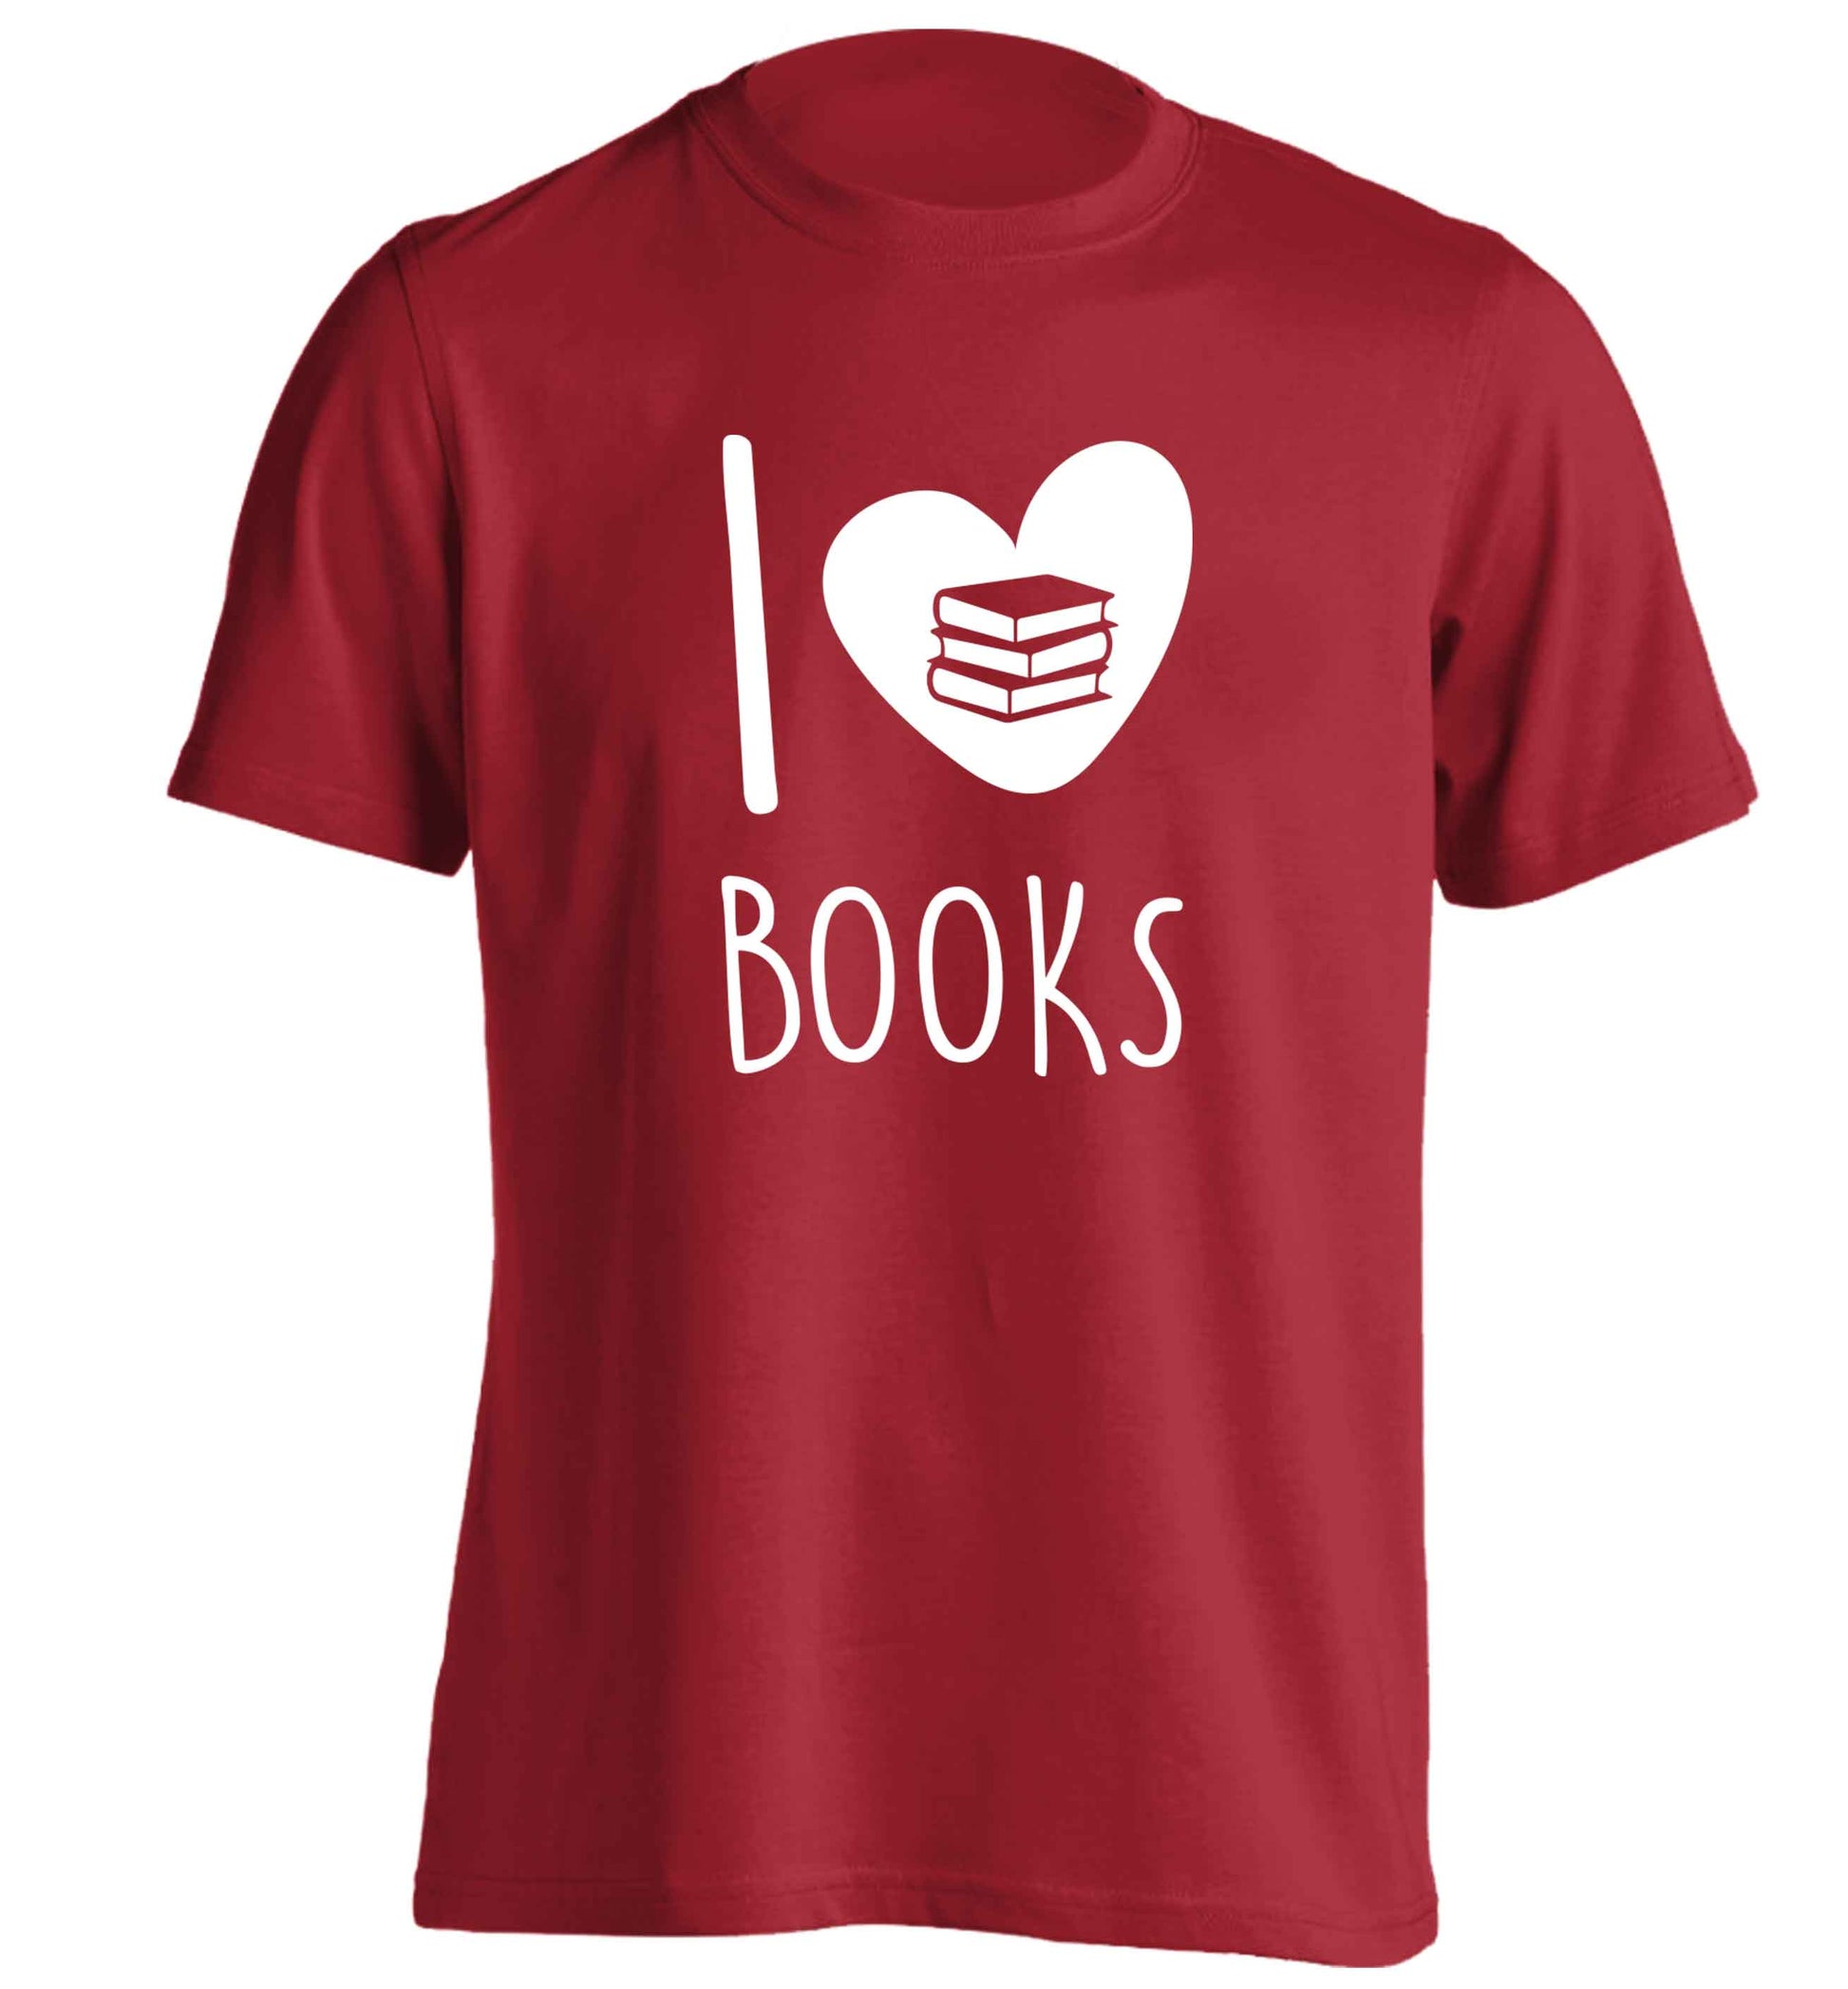 I love books adults unisex red Tshirt 2XL